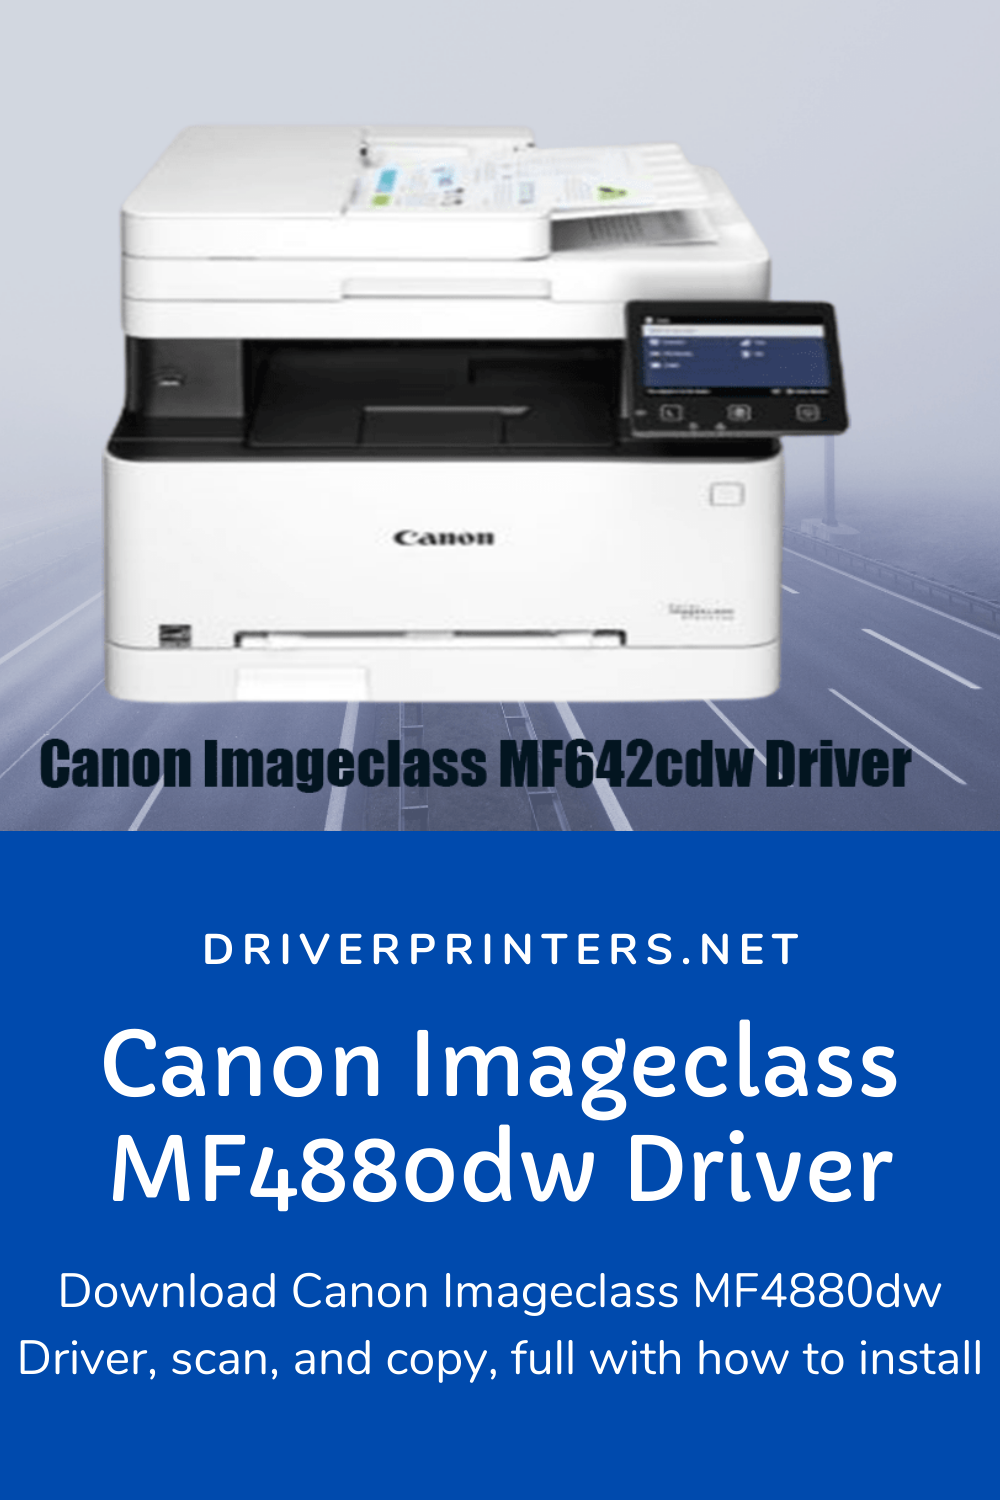 caon imageclass mf4890dw driver for mac